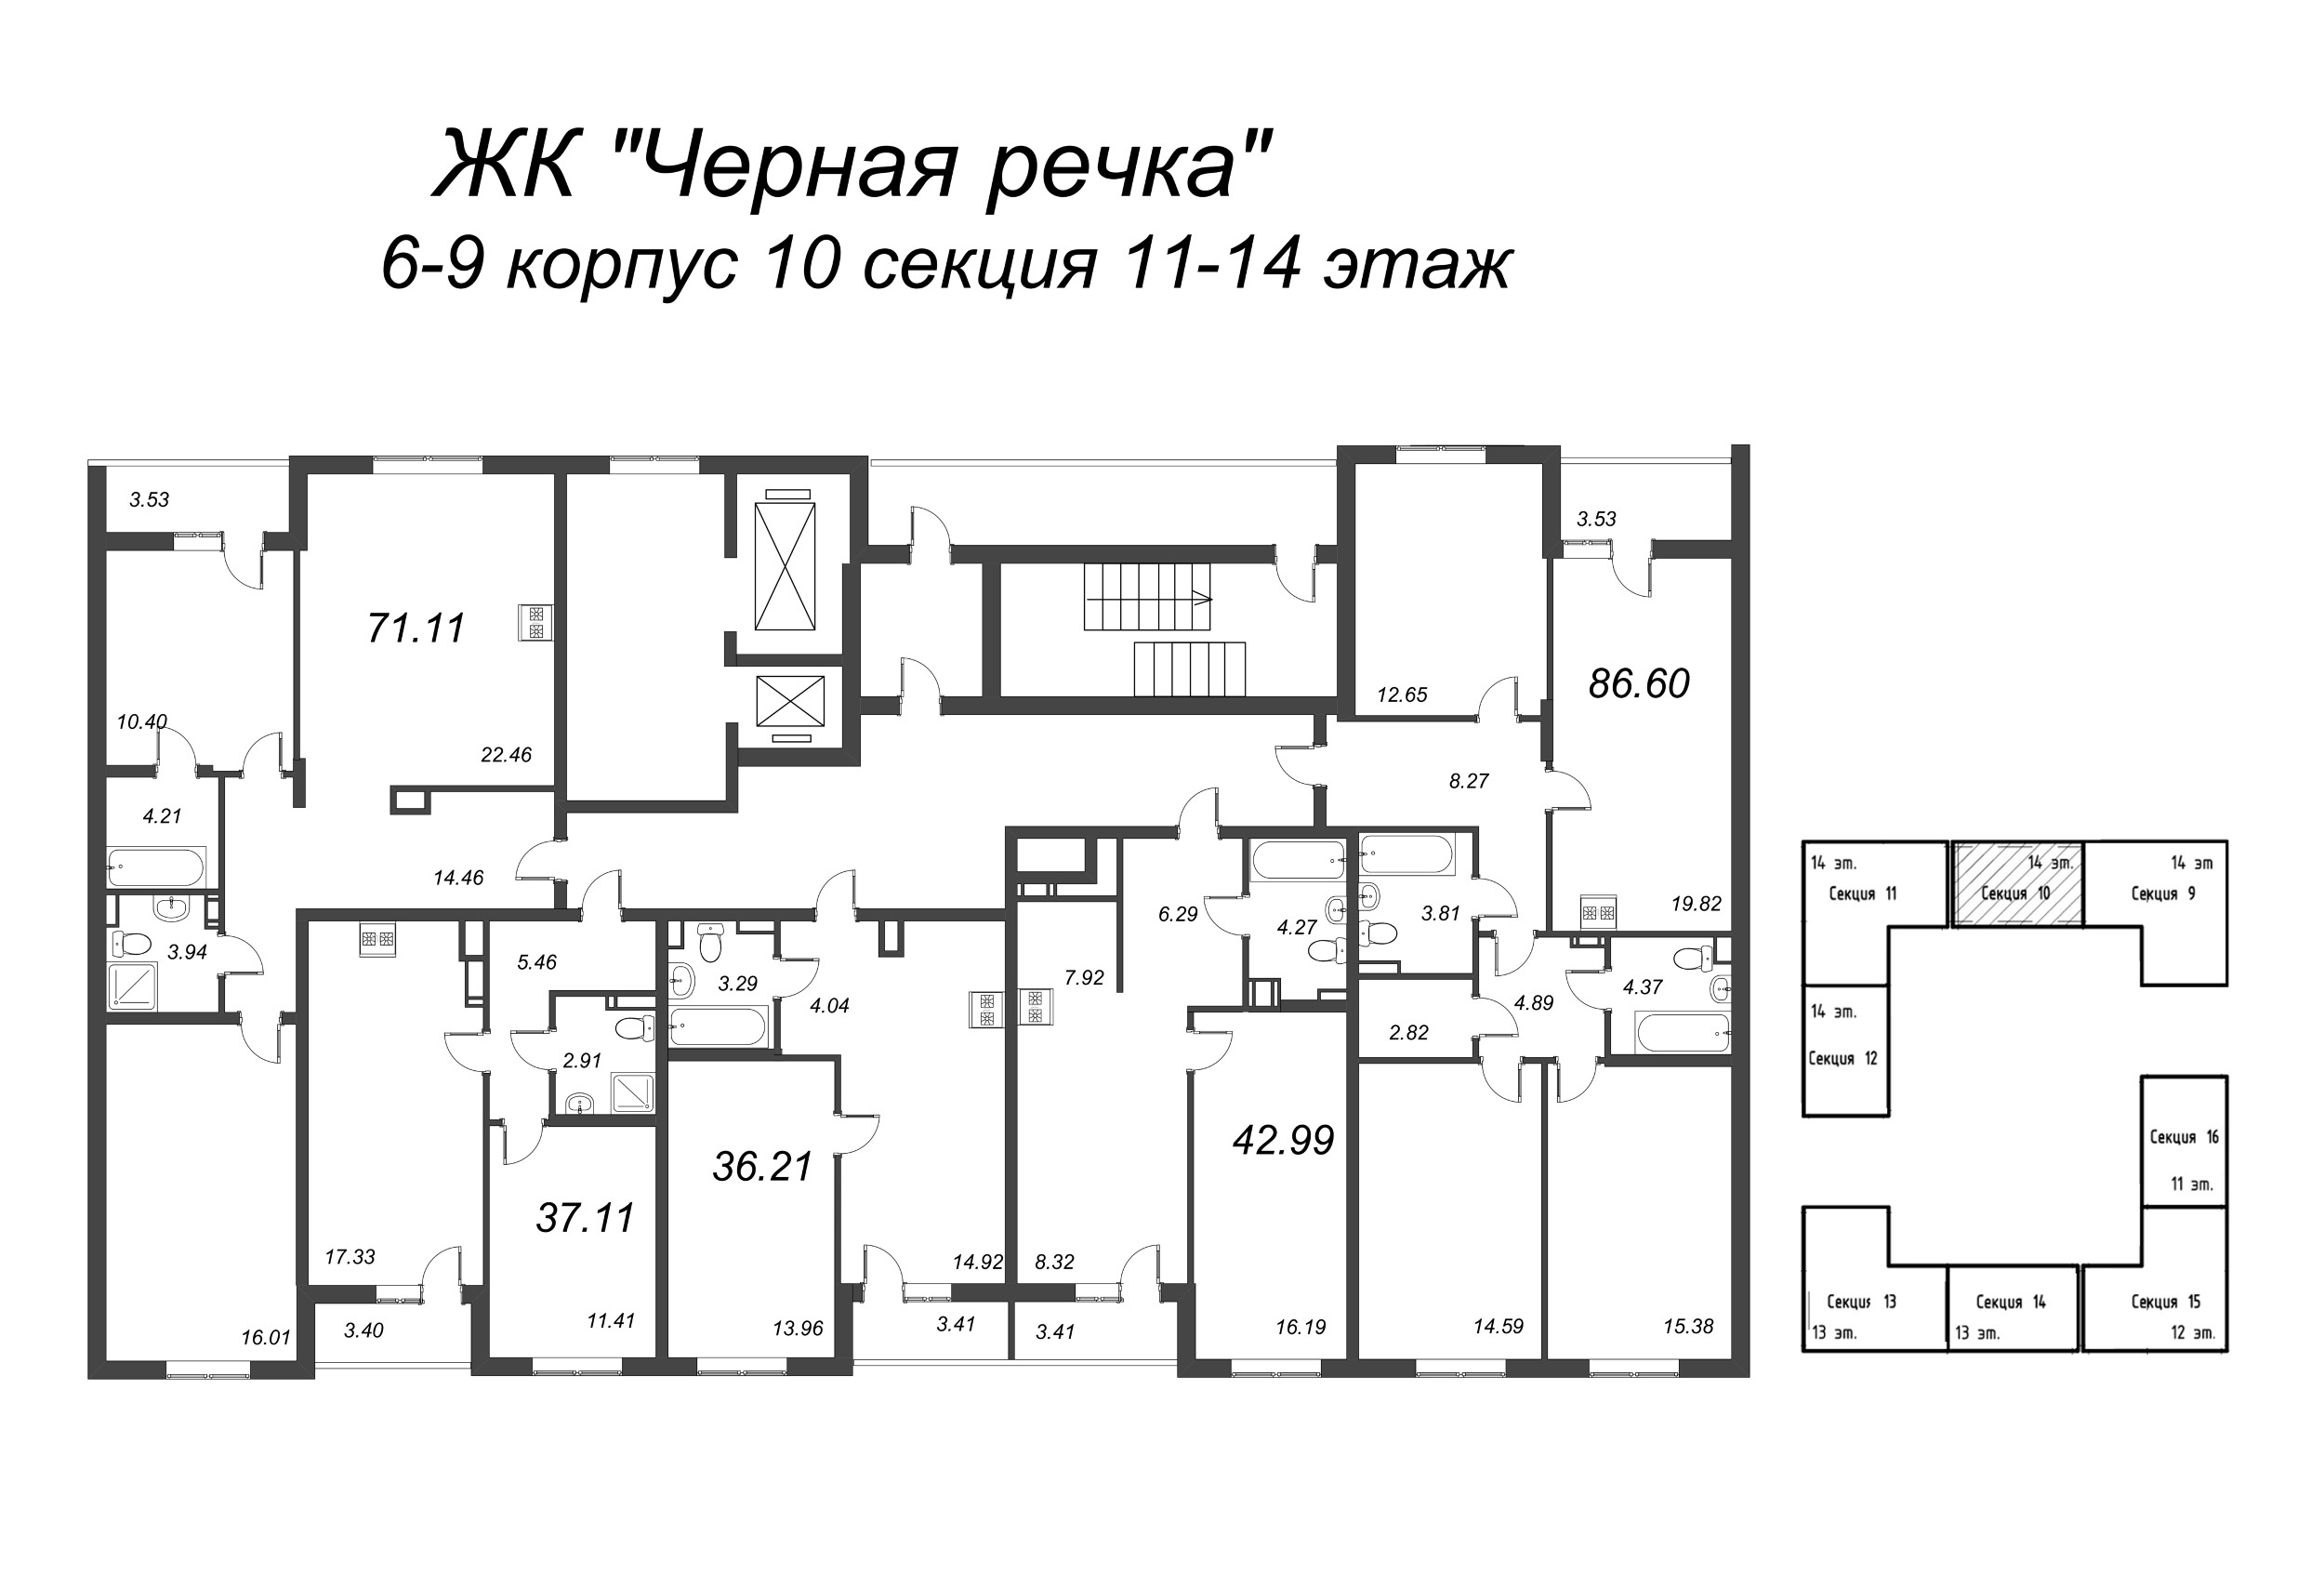 4-комнатная (Евро) квартира, 86.6 м² - планировка этажа